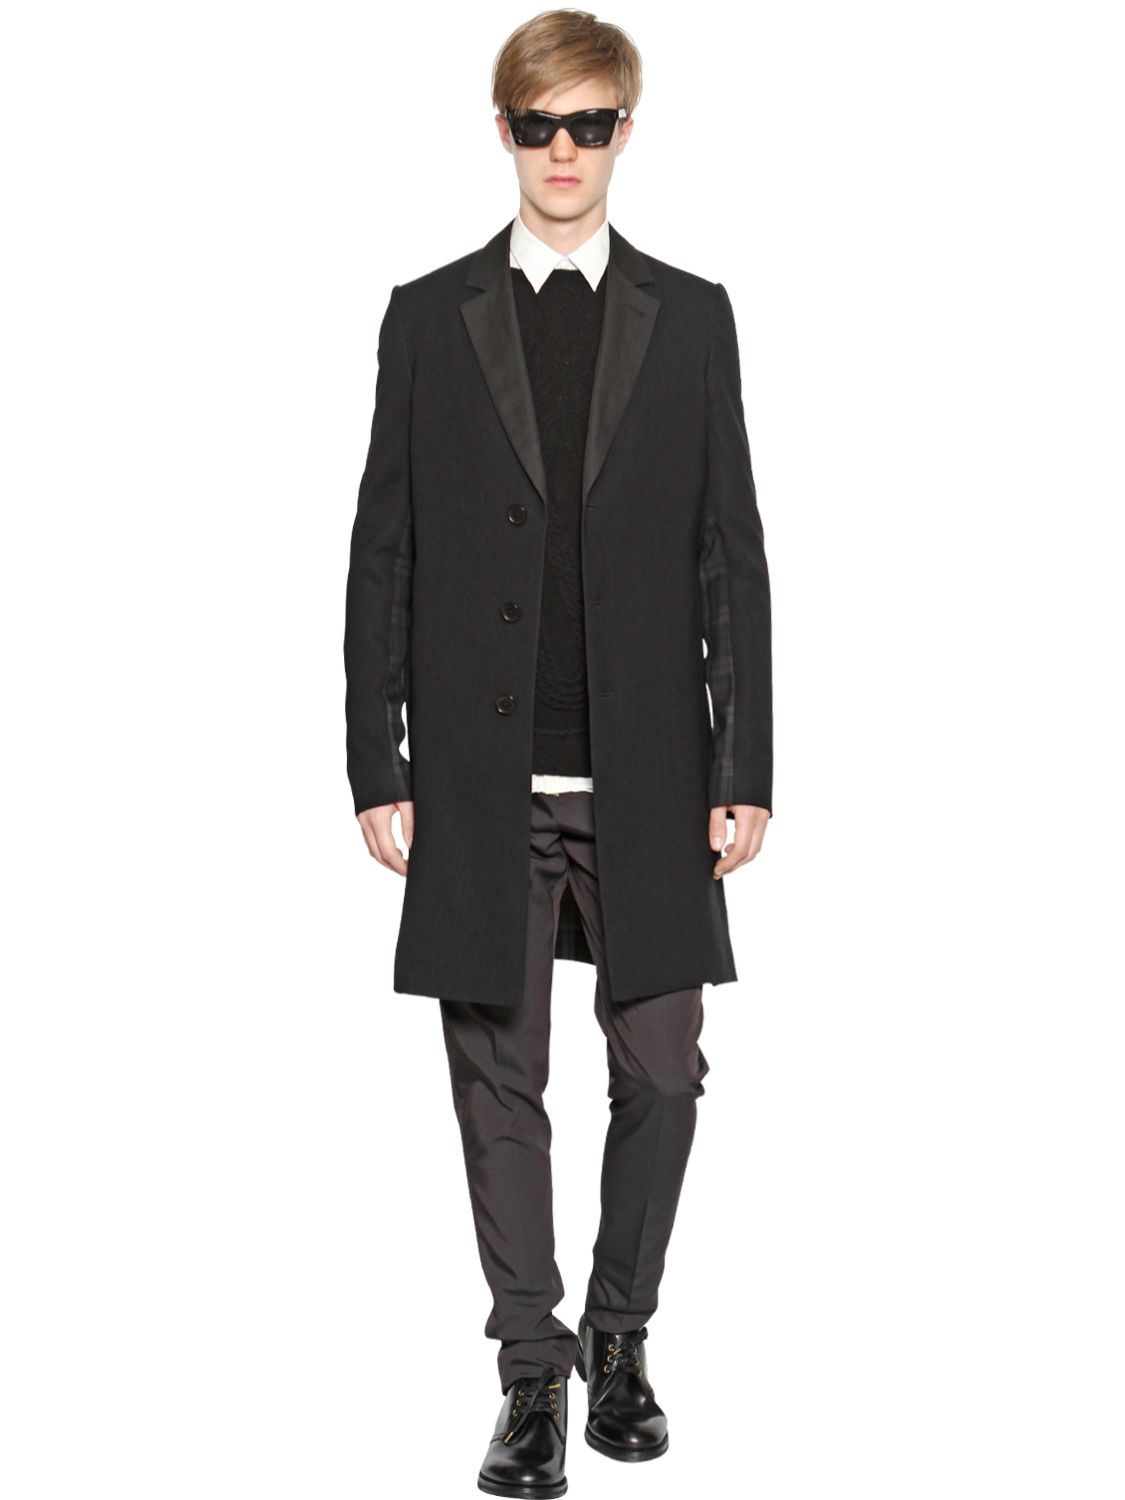 Lyst - Cerruti 1881 Super Light Wool Coat in Black for Men